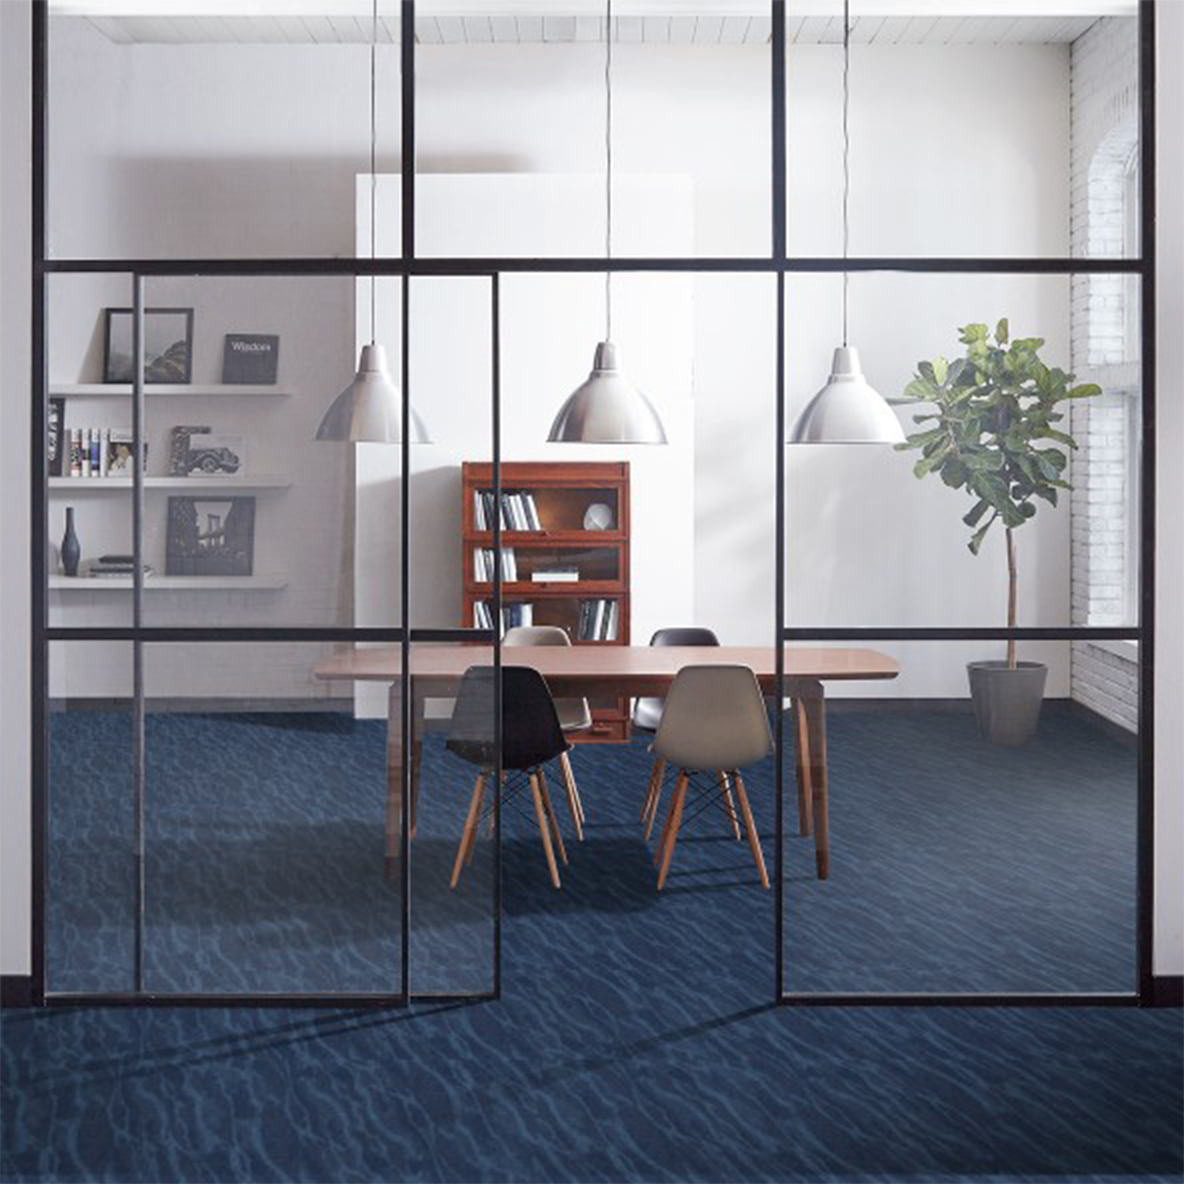 Riverine Commercial Carpet Tile .31 Inch x 50x50 cm per Tile Baltic Blue in Conference room